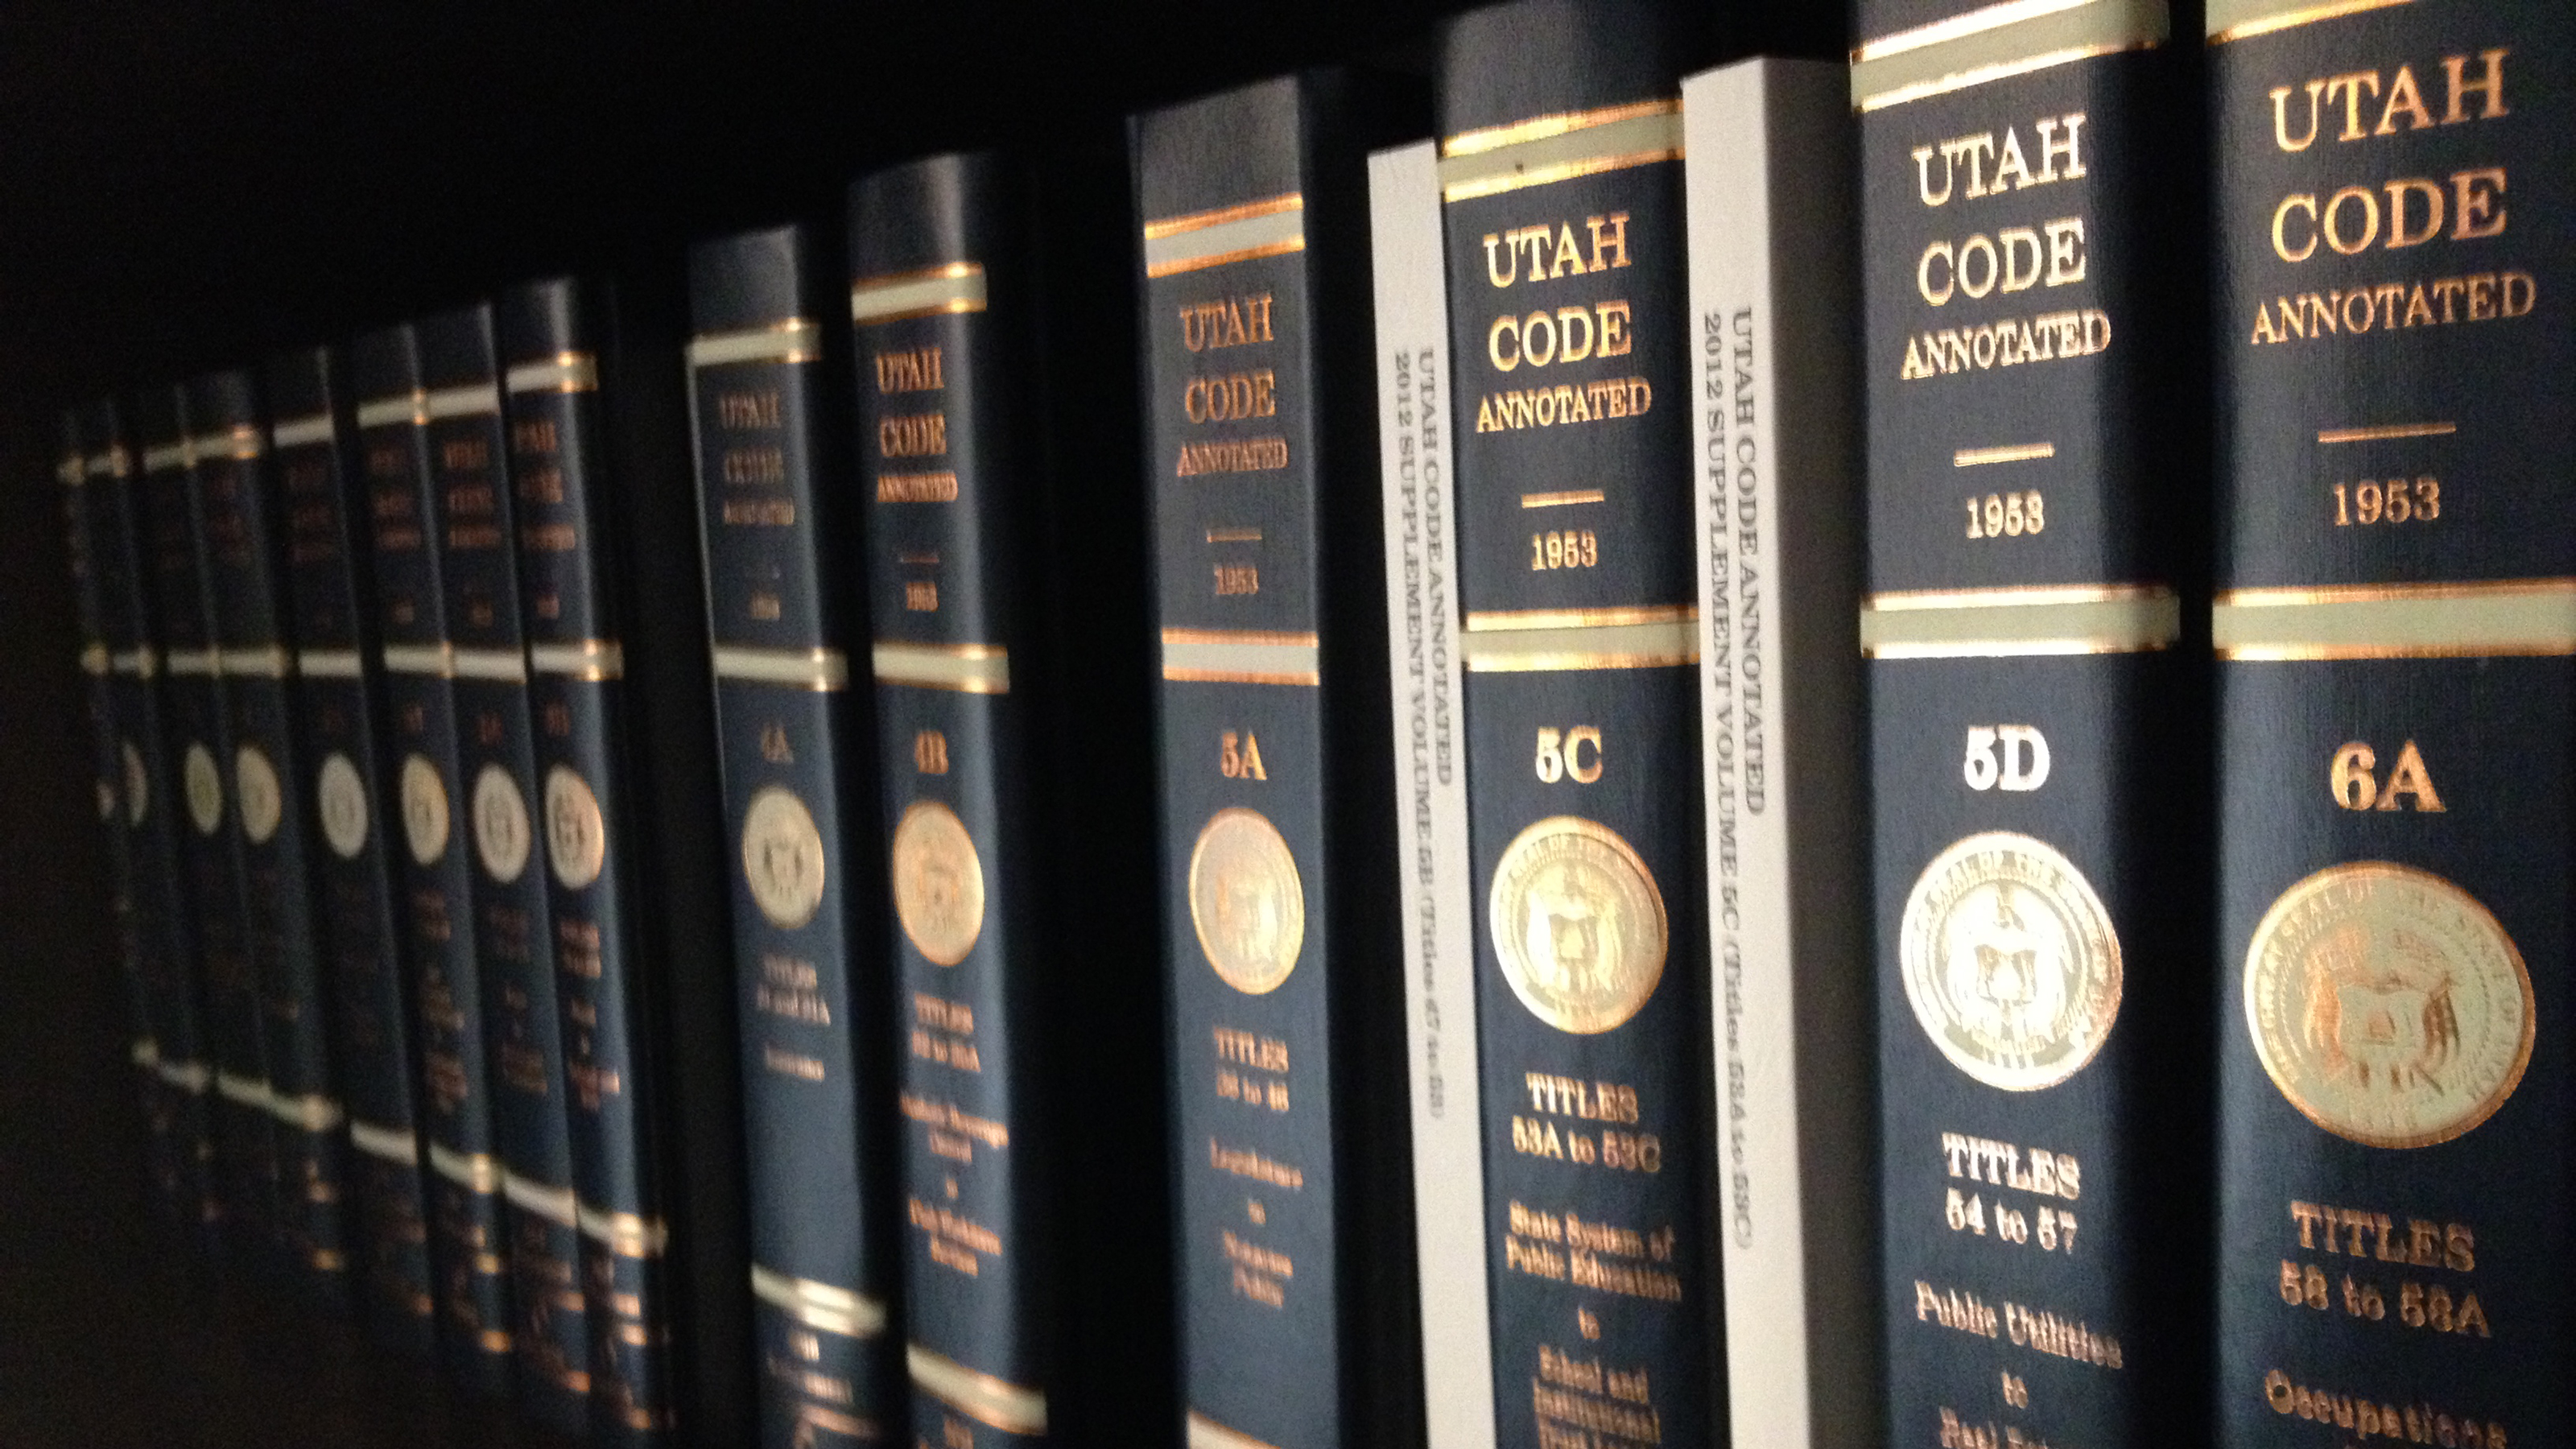 A shelf of Utah Code Annotated